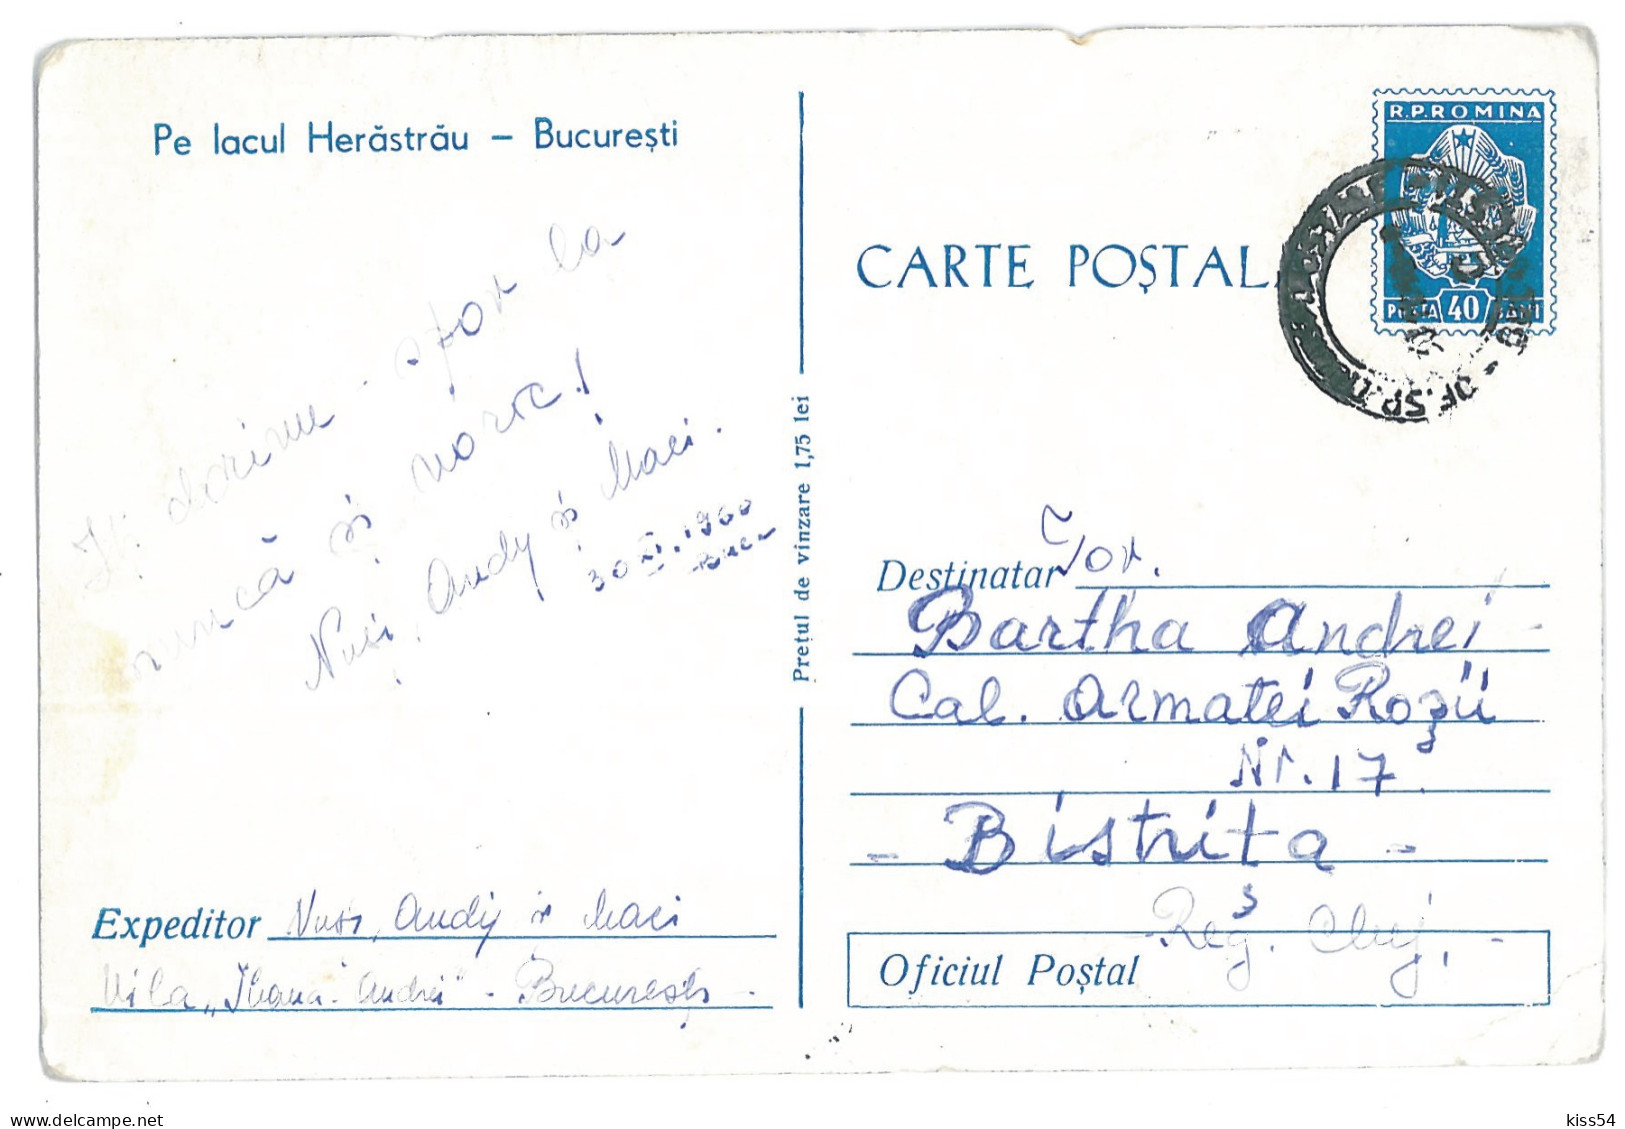 RO 94 - 13620 BUCURESTI, Romania, Lake Herastrau - Stationery, Old Postcard - Used - 1960  - Roumanie